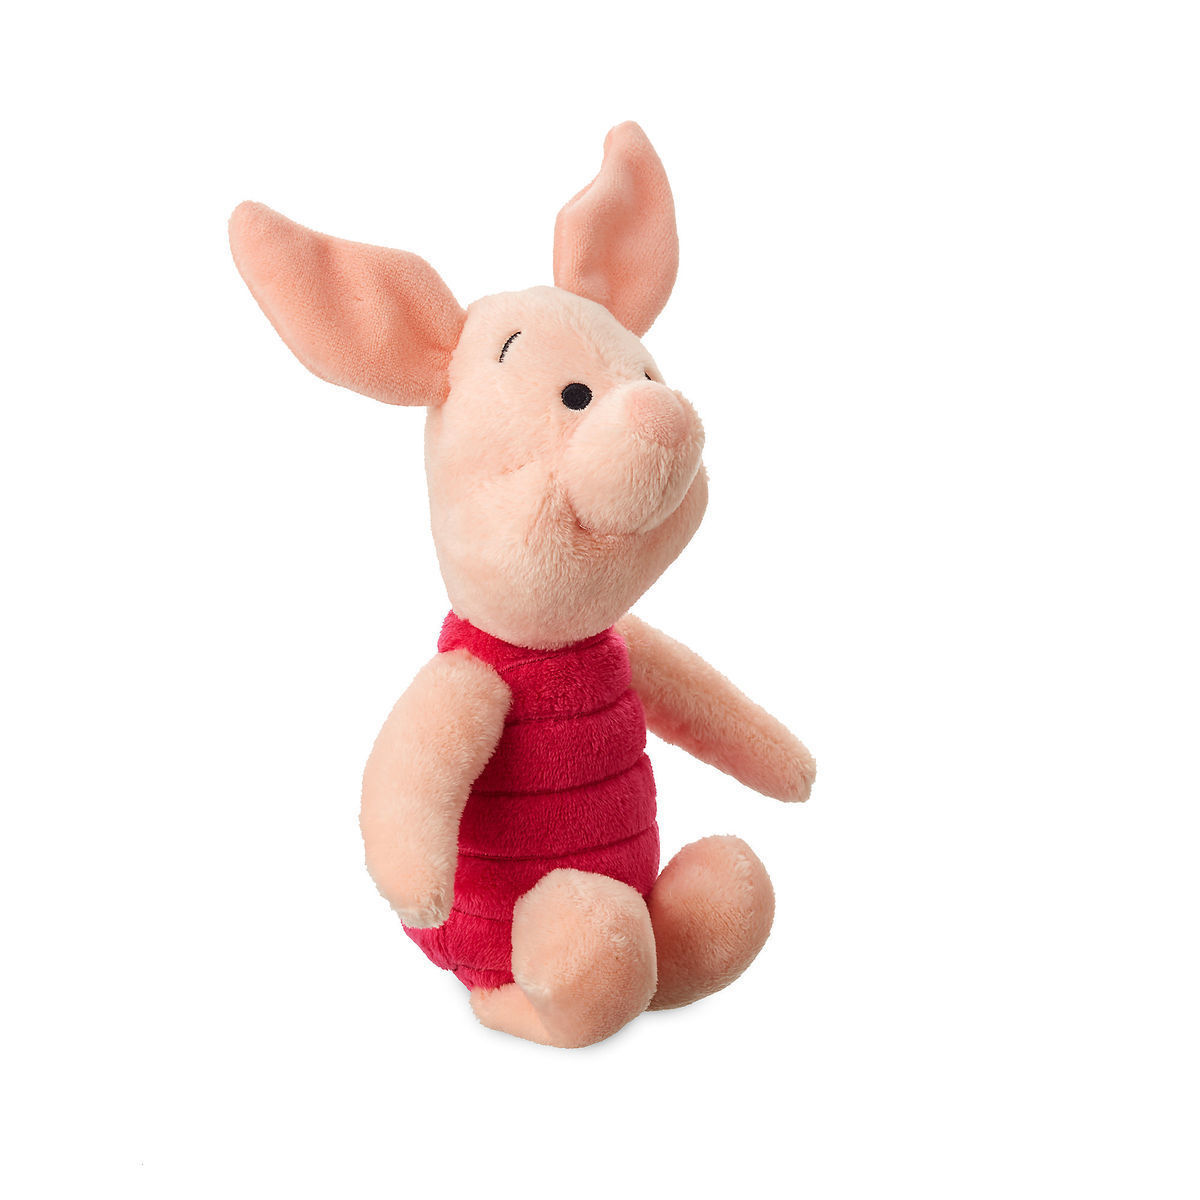 Disney Store Winnie the Pooh Piglet Small Plush Toy Doll Stuffed Animal NWT